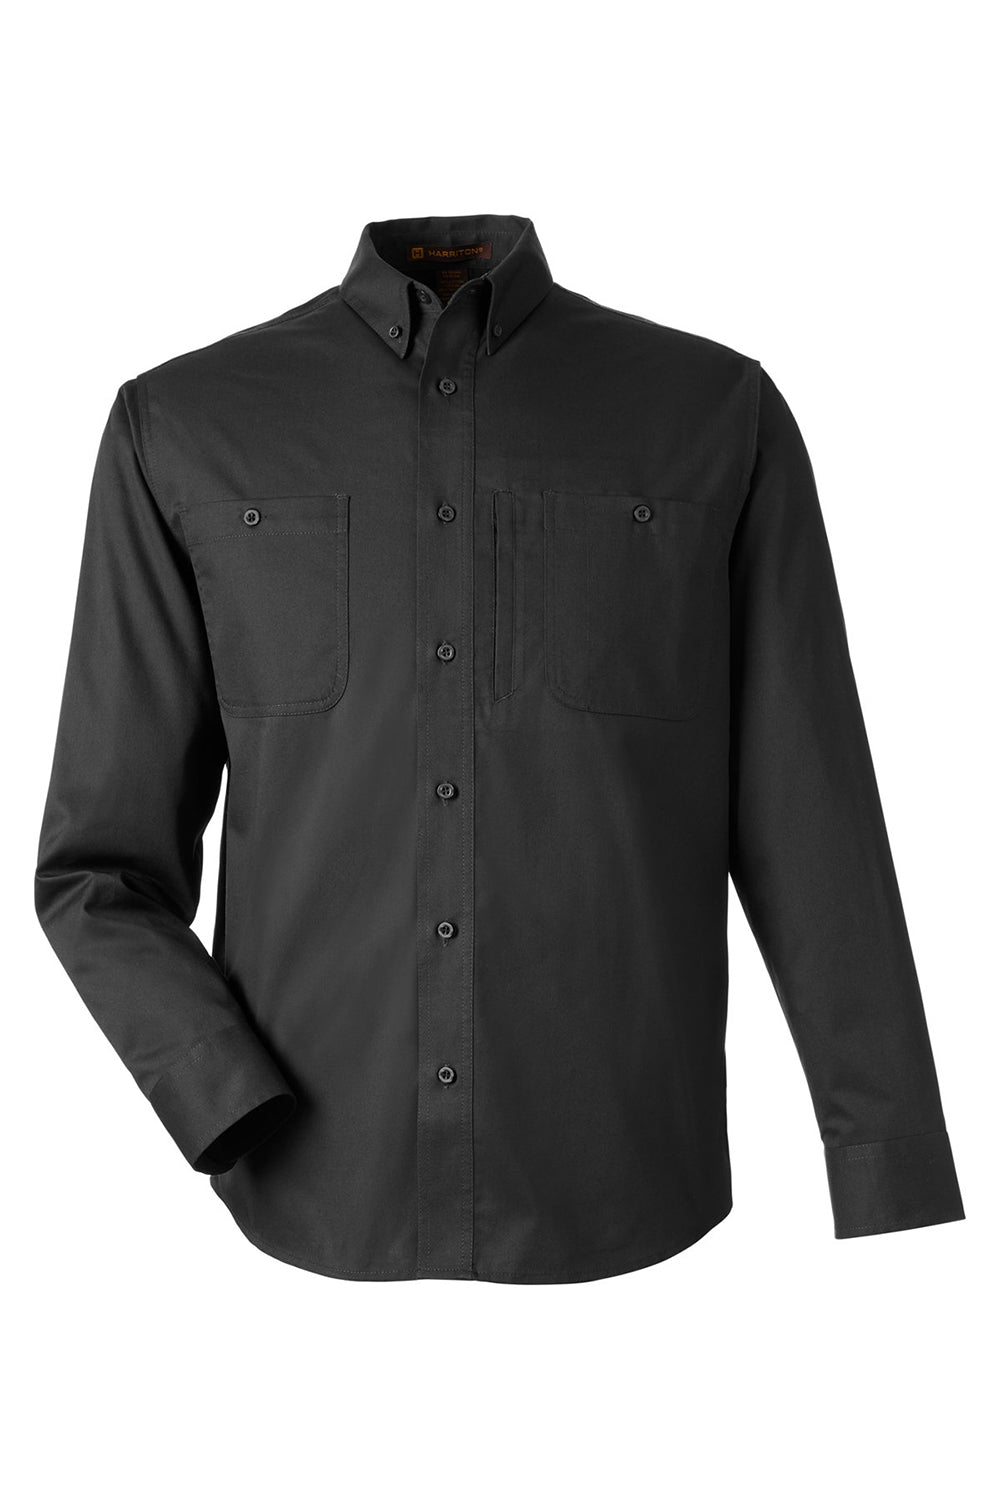 Harriton M585L Mens Advantage Long Sleeve Button Down Shirt w/ Double Pockets Black Flat Front